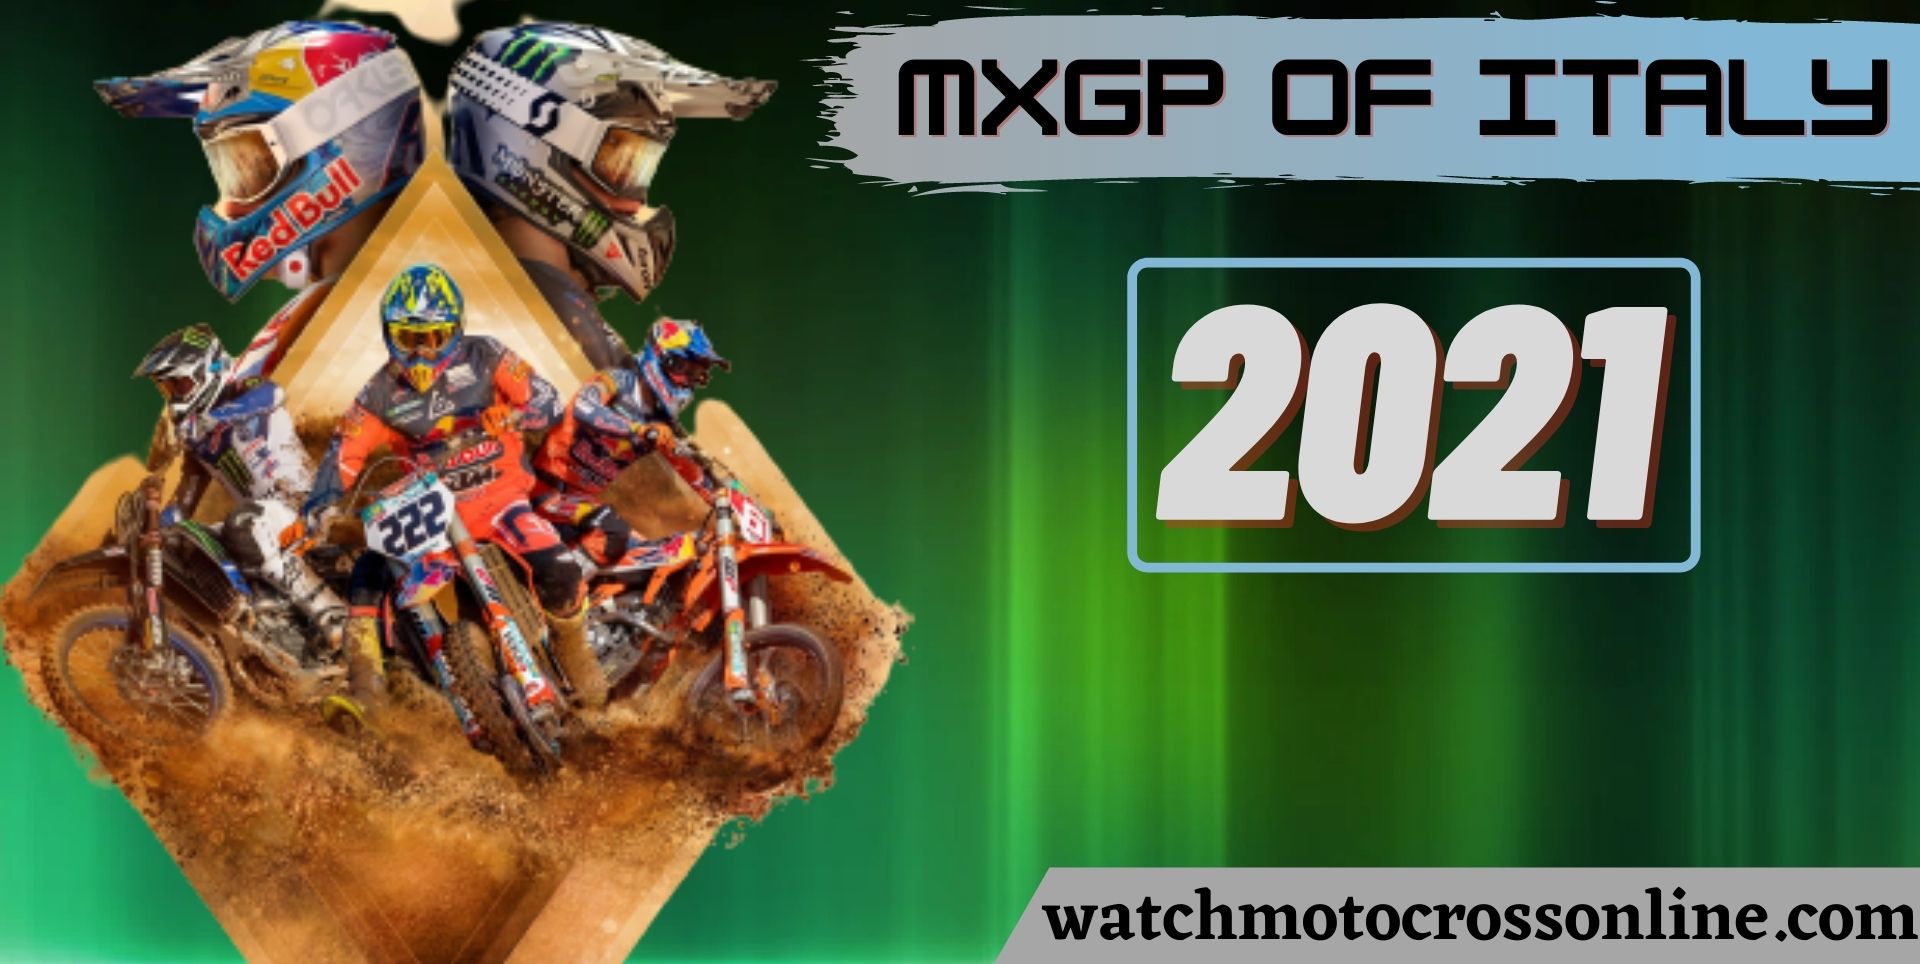 MXGP of Italy Live Stream